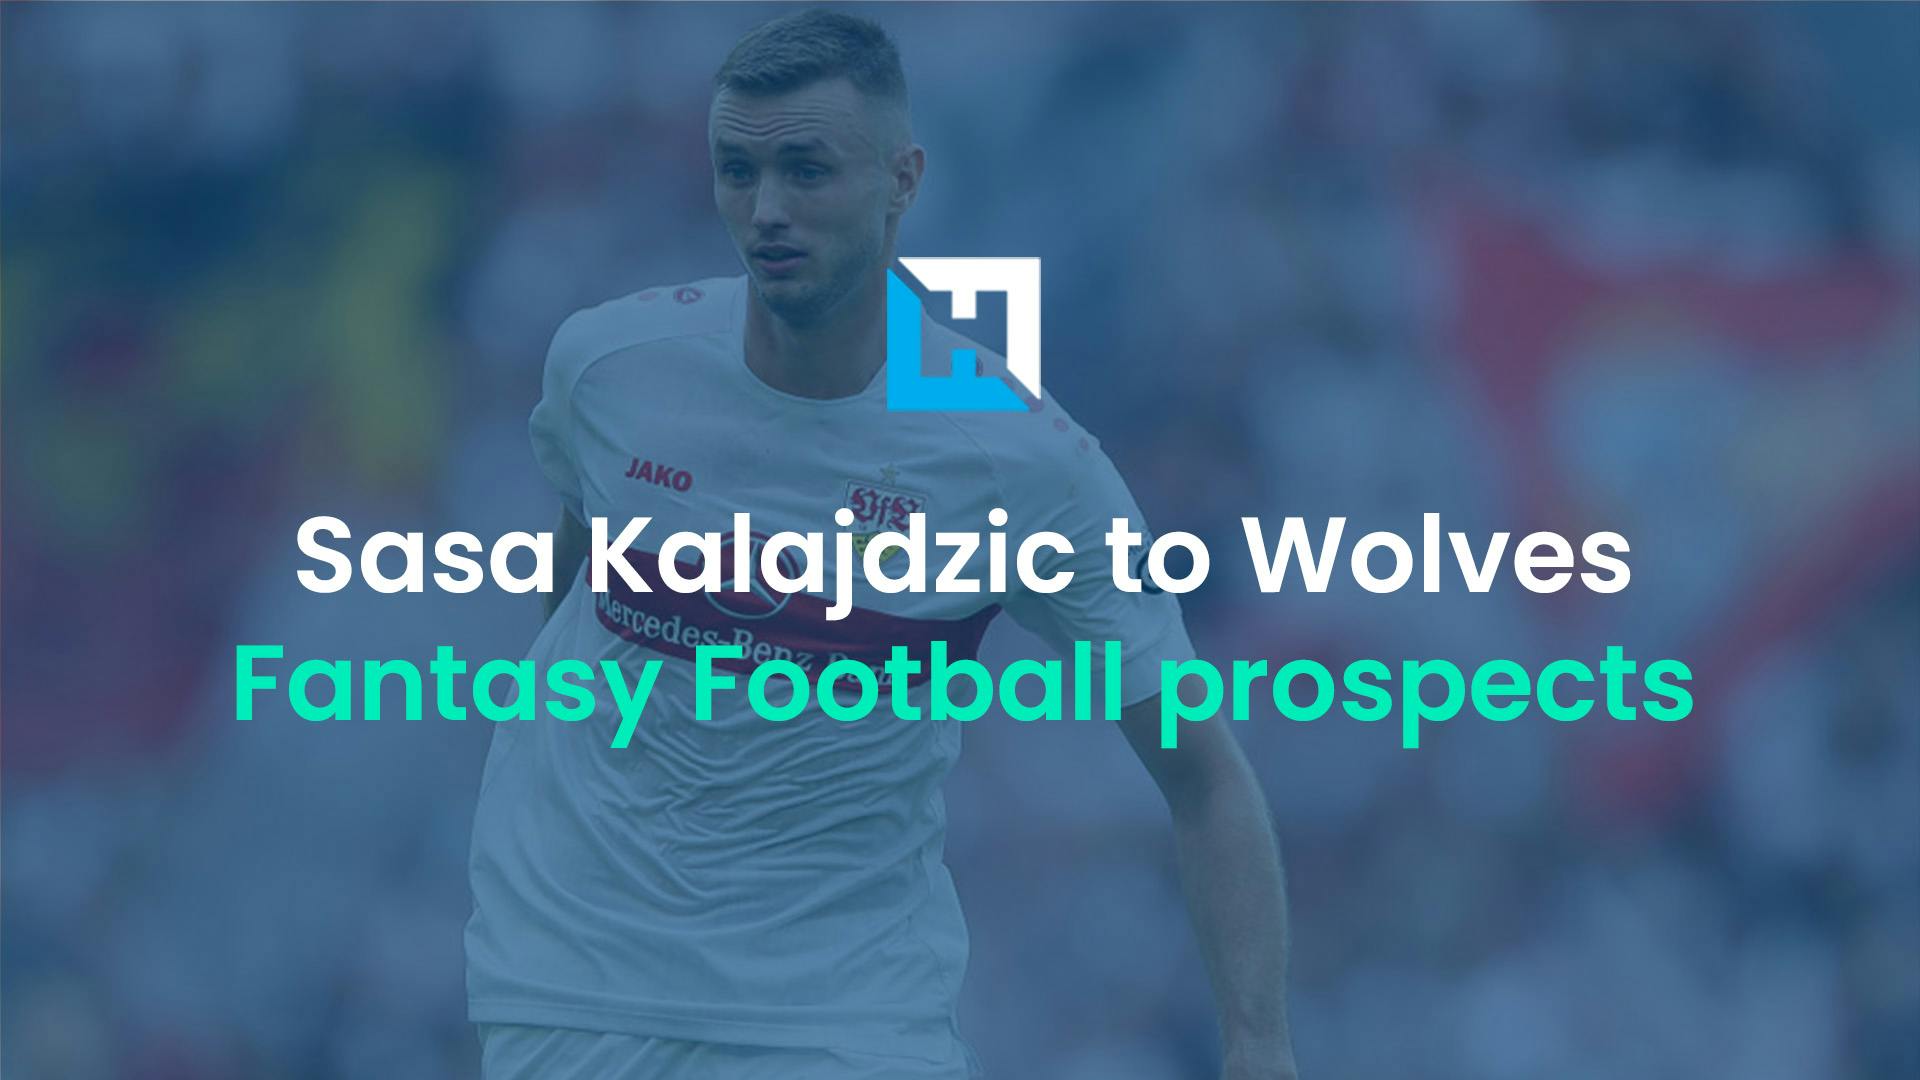 Sasa Kalajdzic: FPL, Sky, TFF and Dream Team prospects